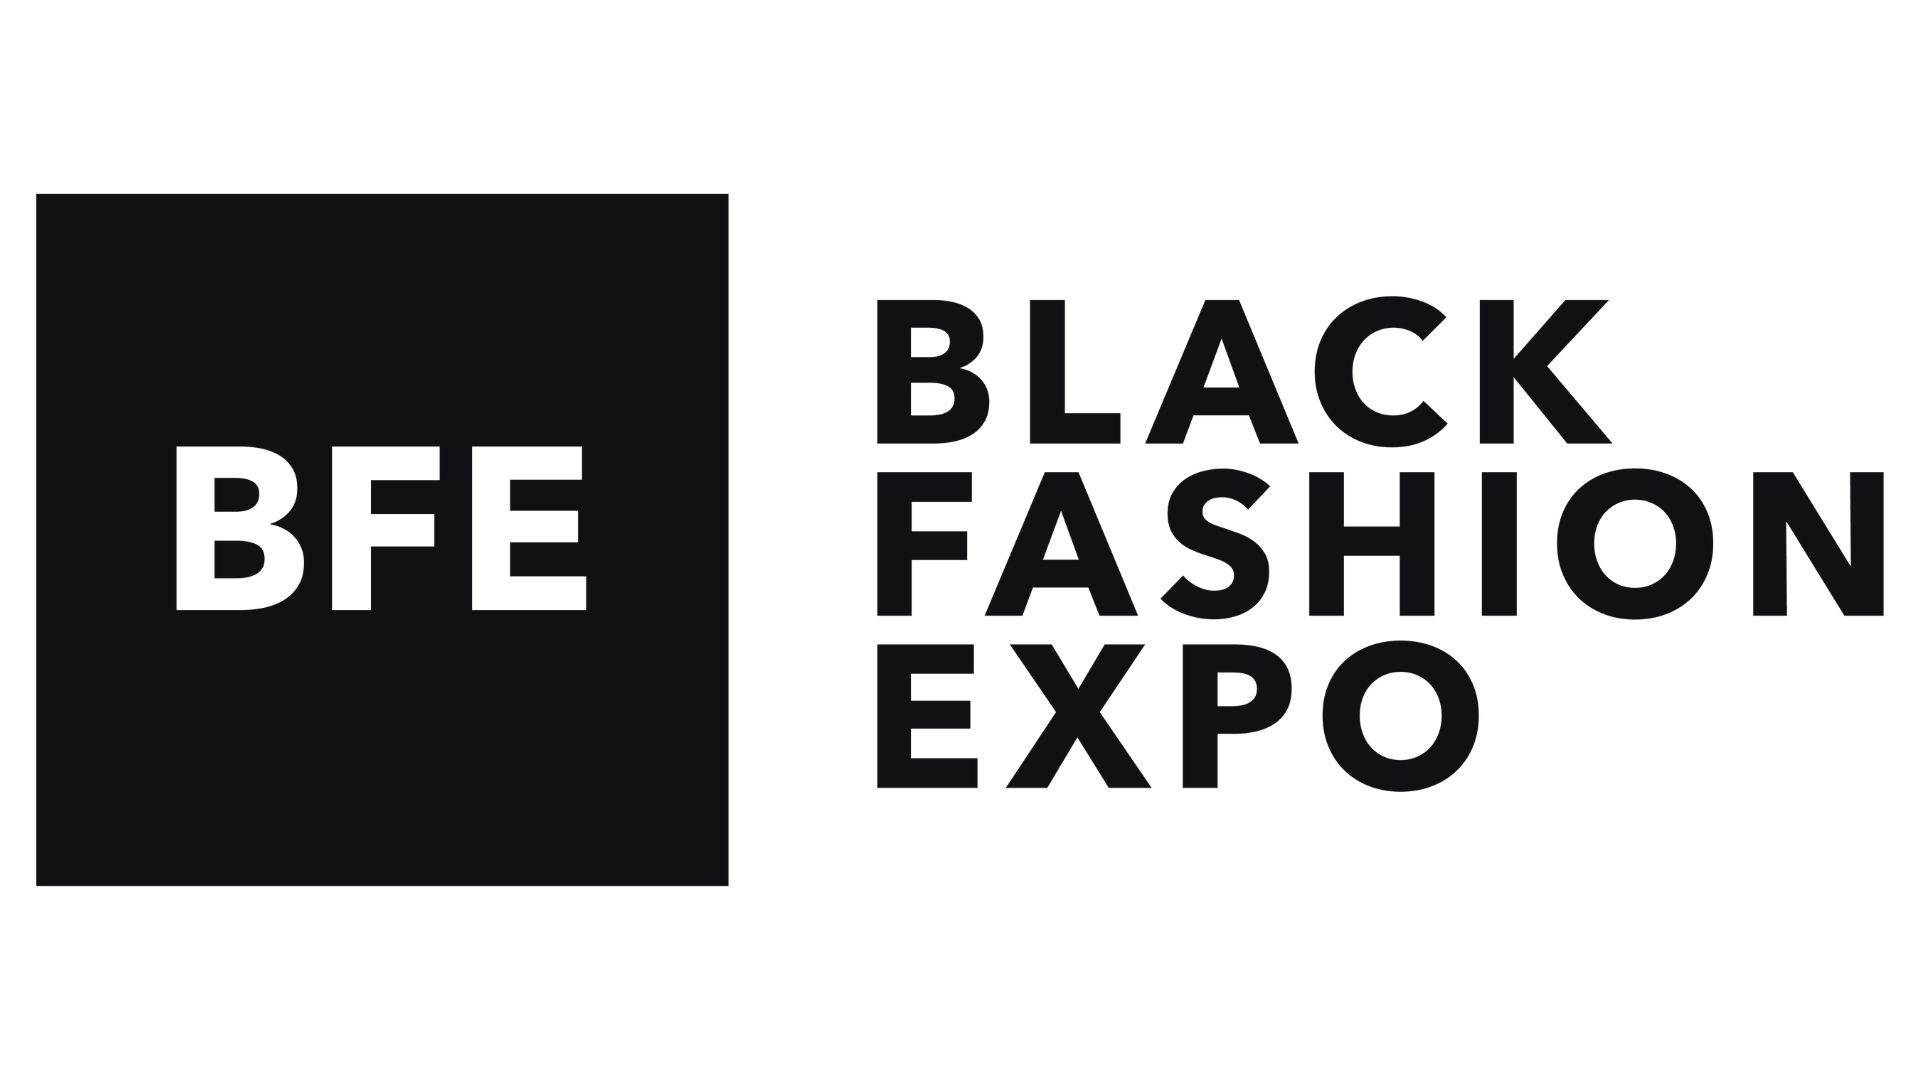 Black Fashion Expo